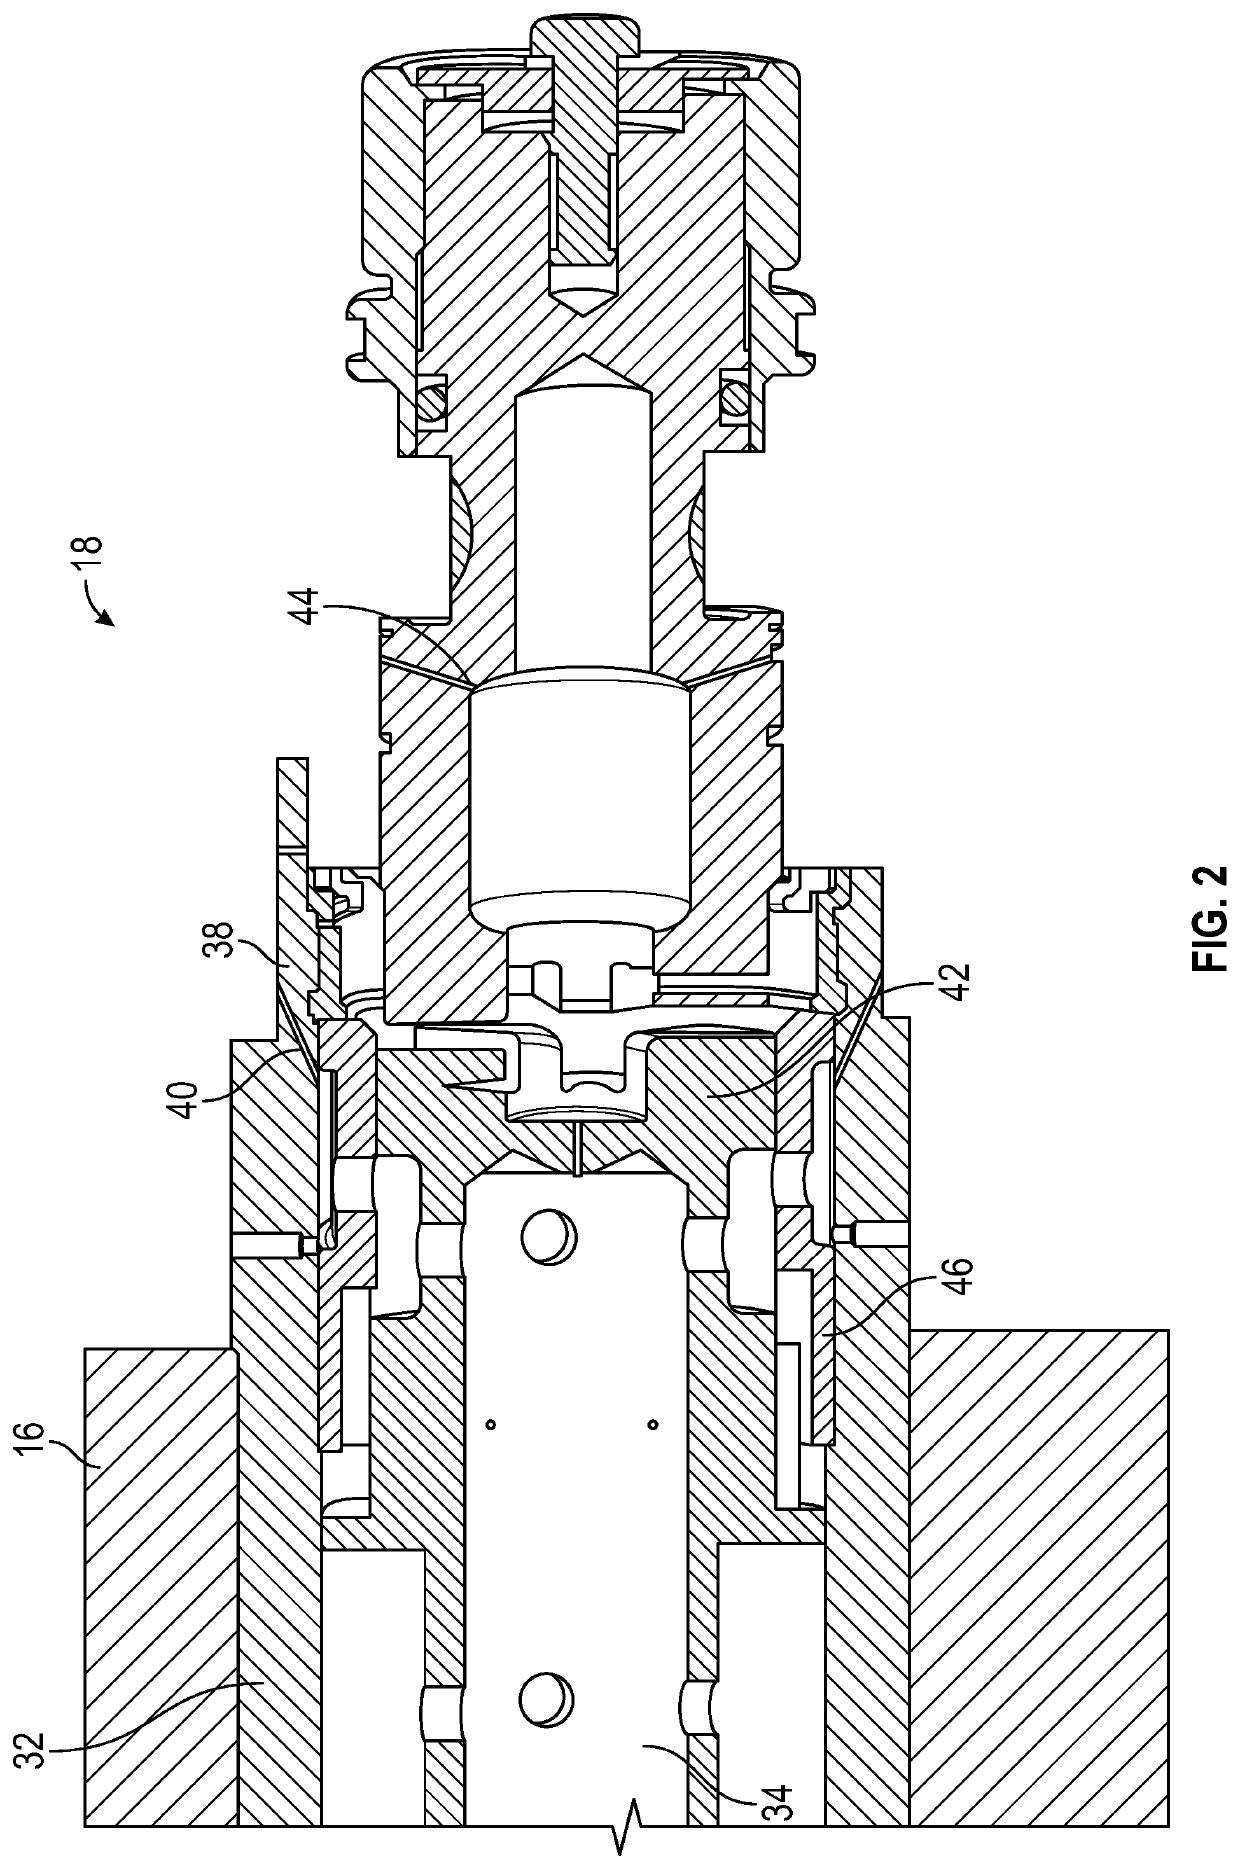 Generator with torsional damper